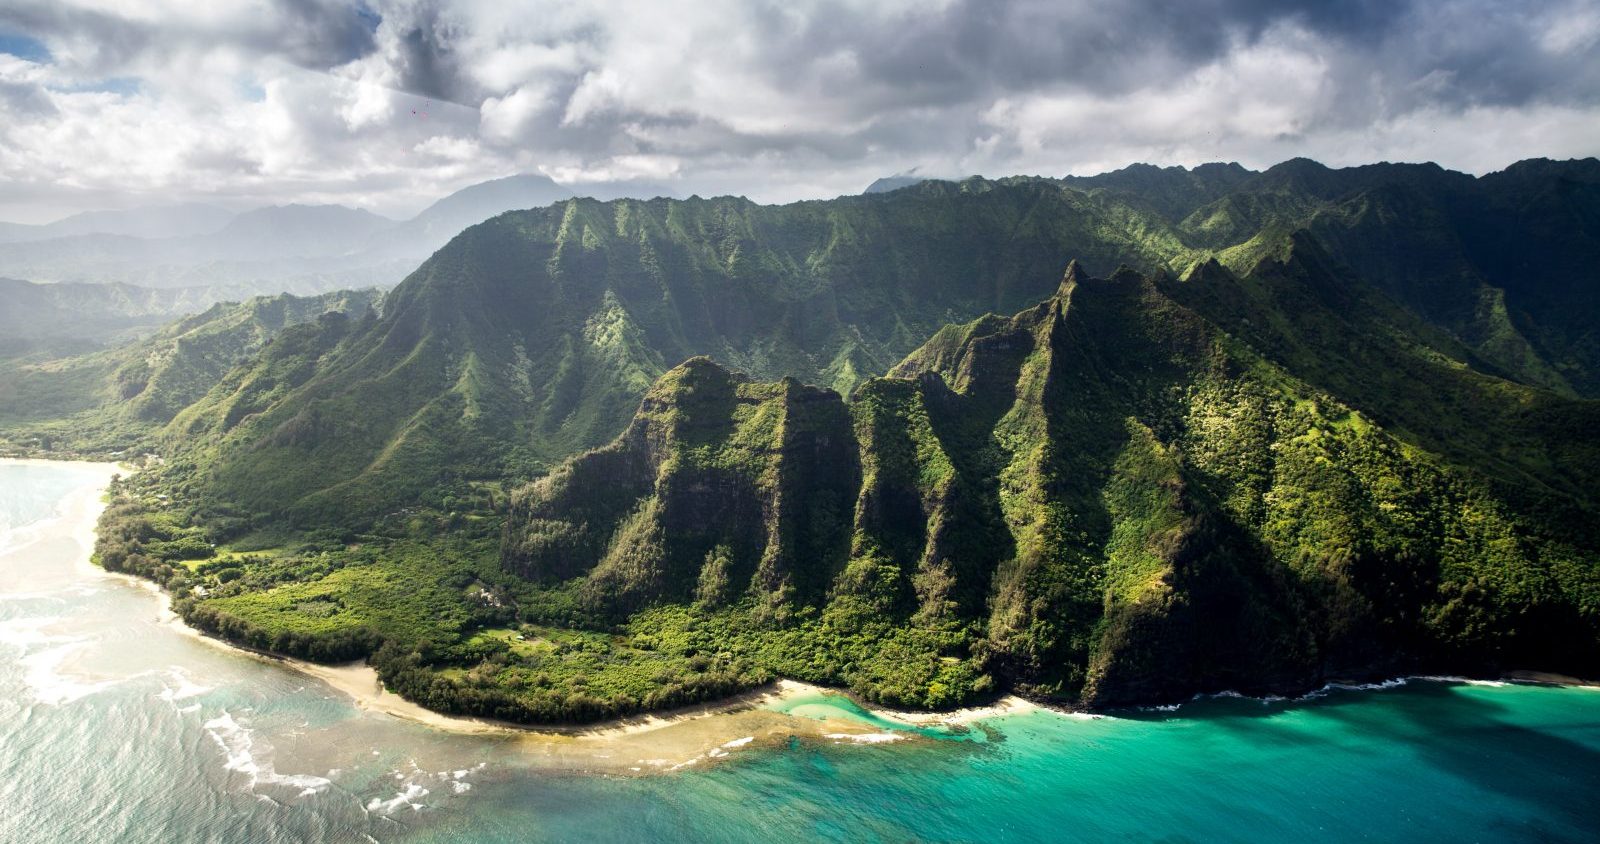 Hawaii Wildlife Fund defends Clean “ Wai” Water